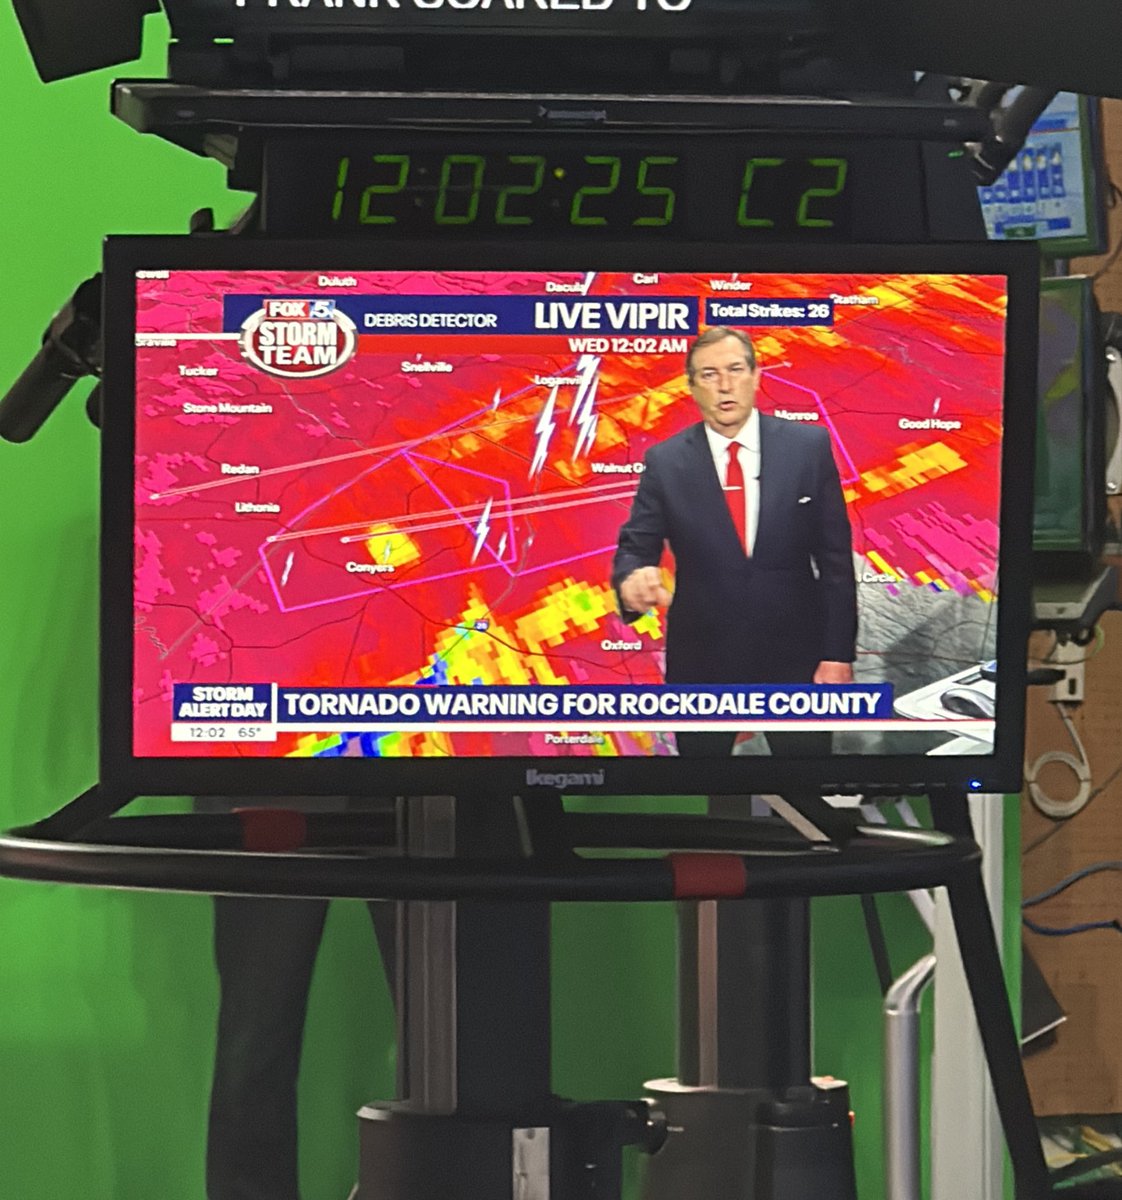 #BREAKING We’re on the air on @FOX5Atlanta with tornado warnings in north Georgia #fox5storm